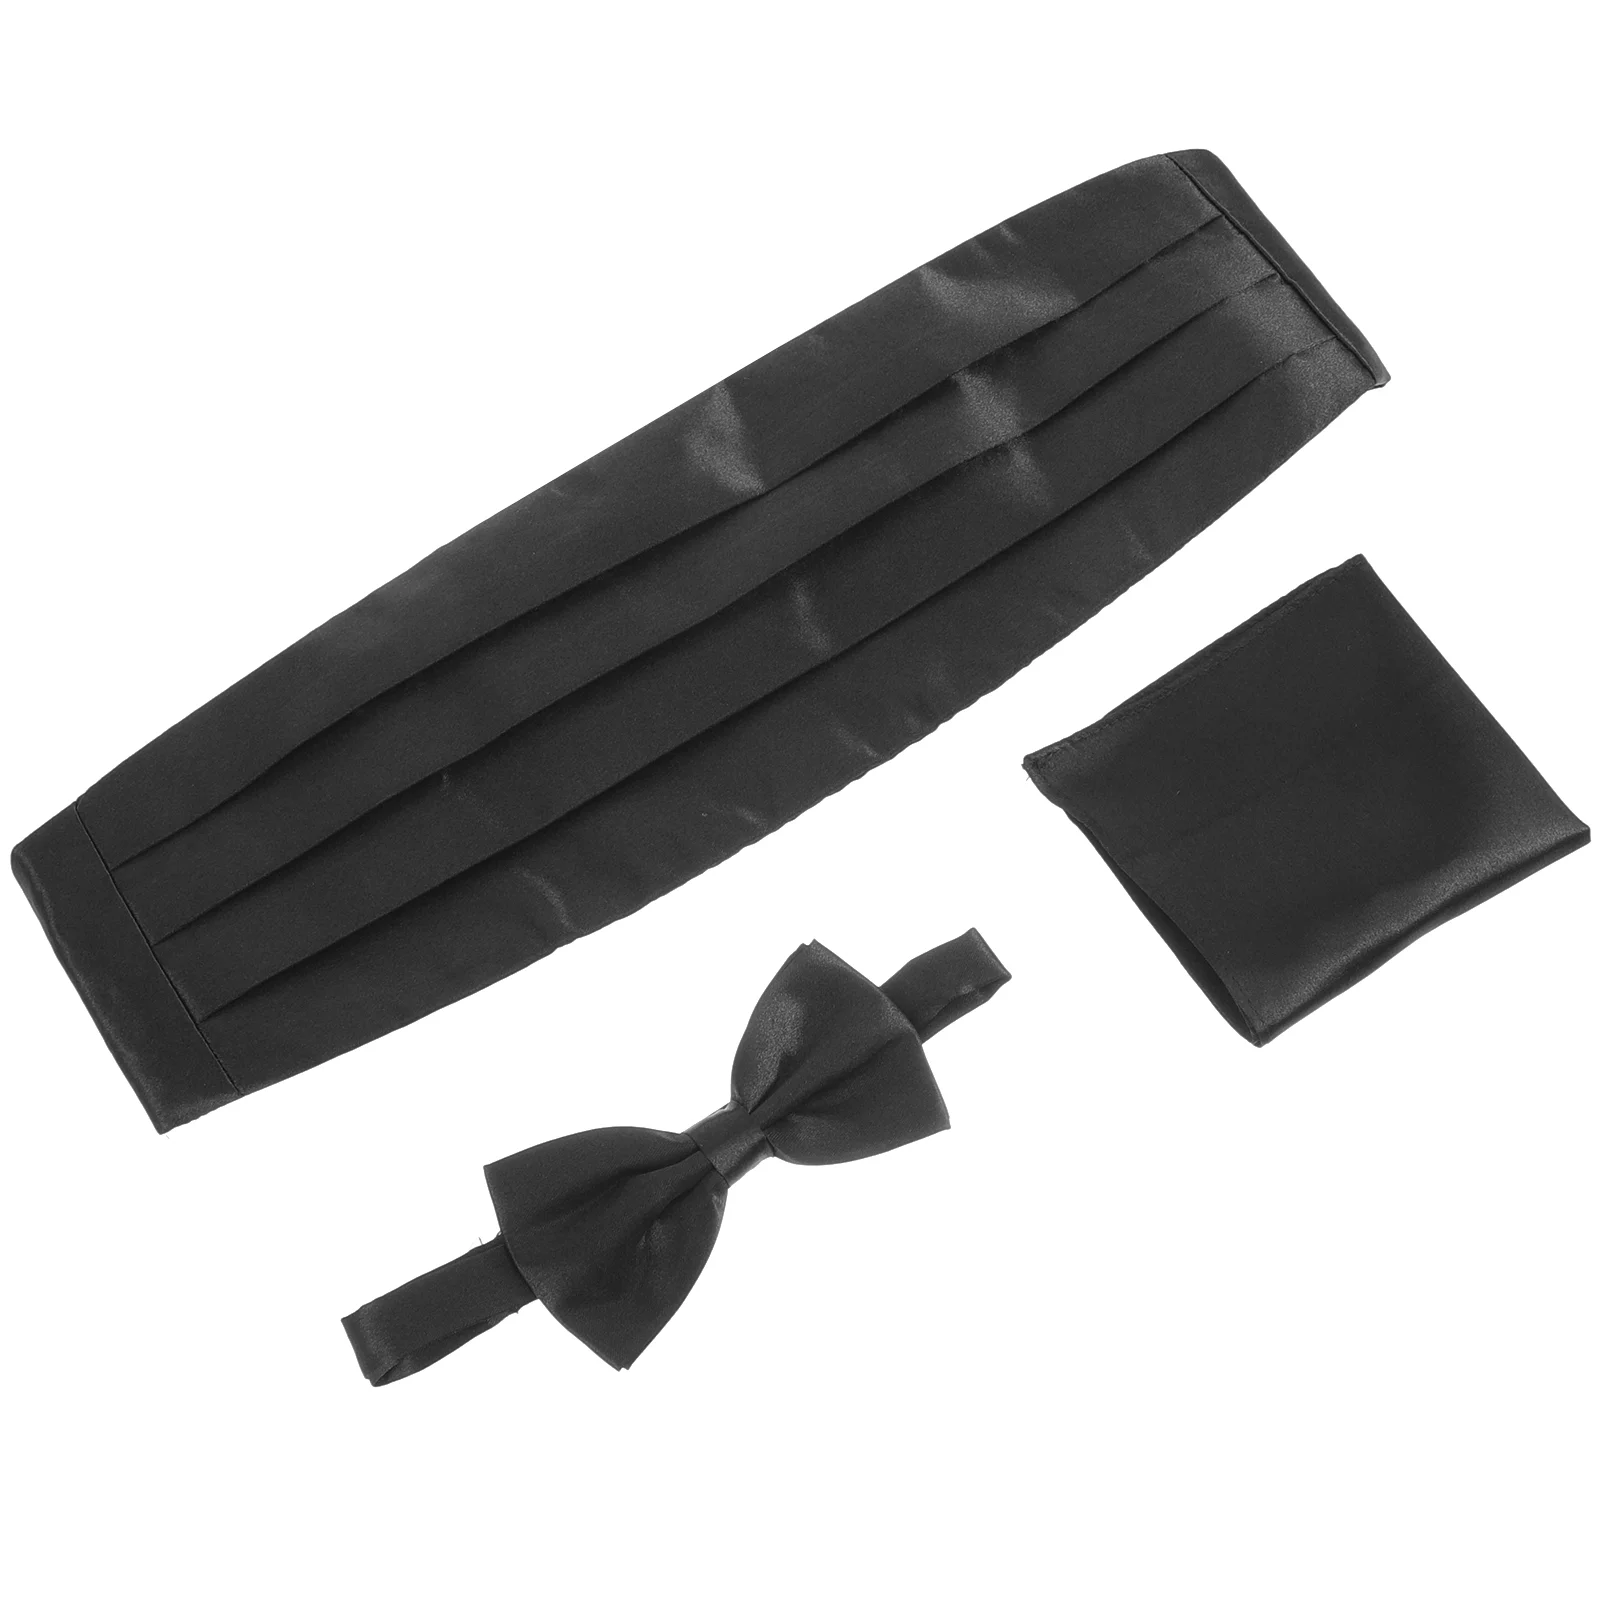 

3 Pcs Men Suit Accessories Cummerbund Bow Tie Men's Handkerchief Black Ties for